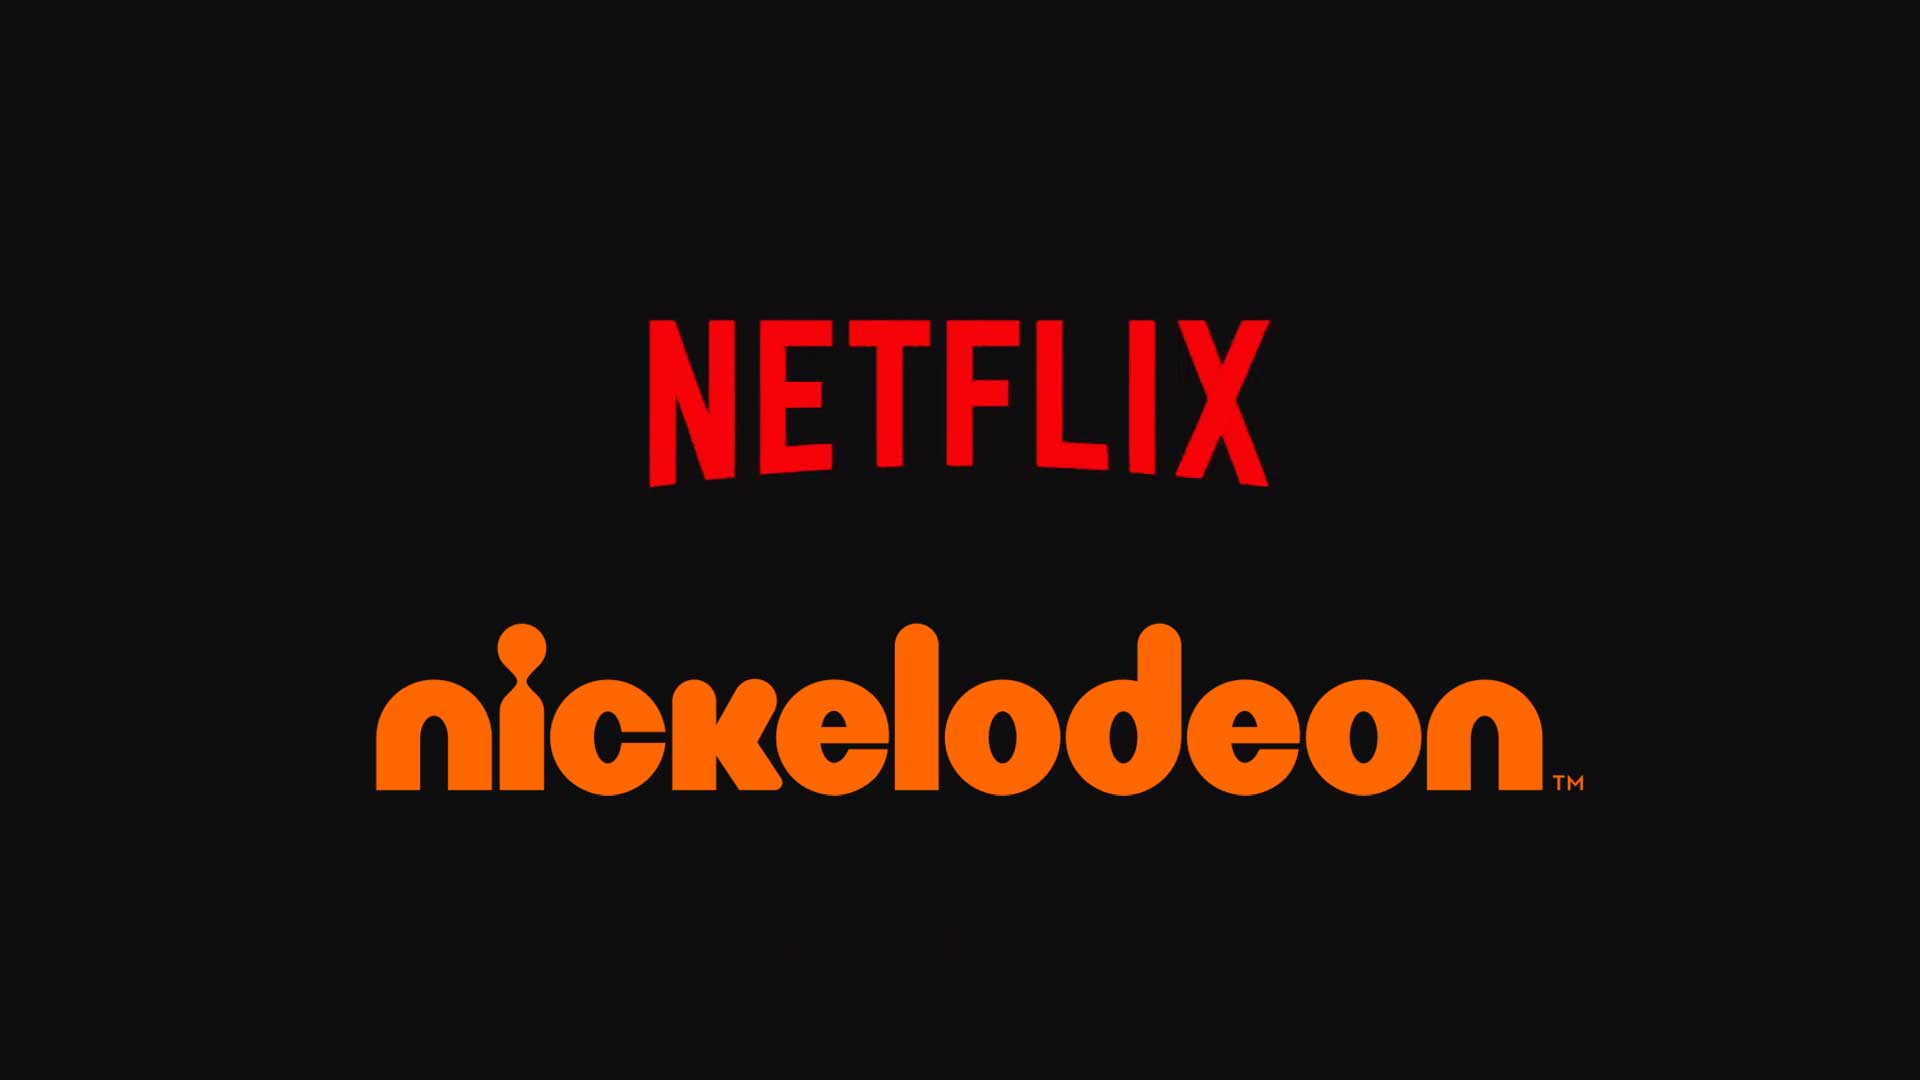 Netflix ft nickelodeon babt